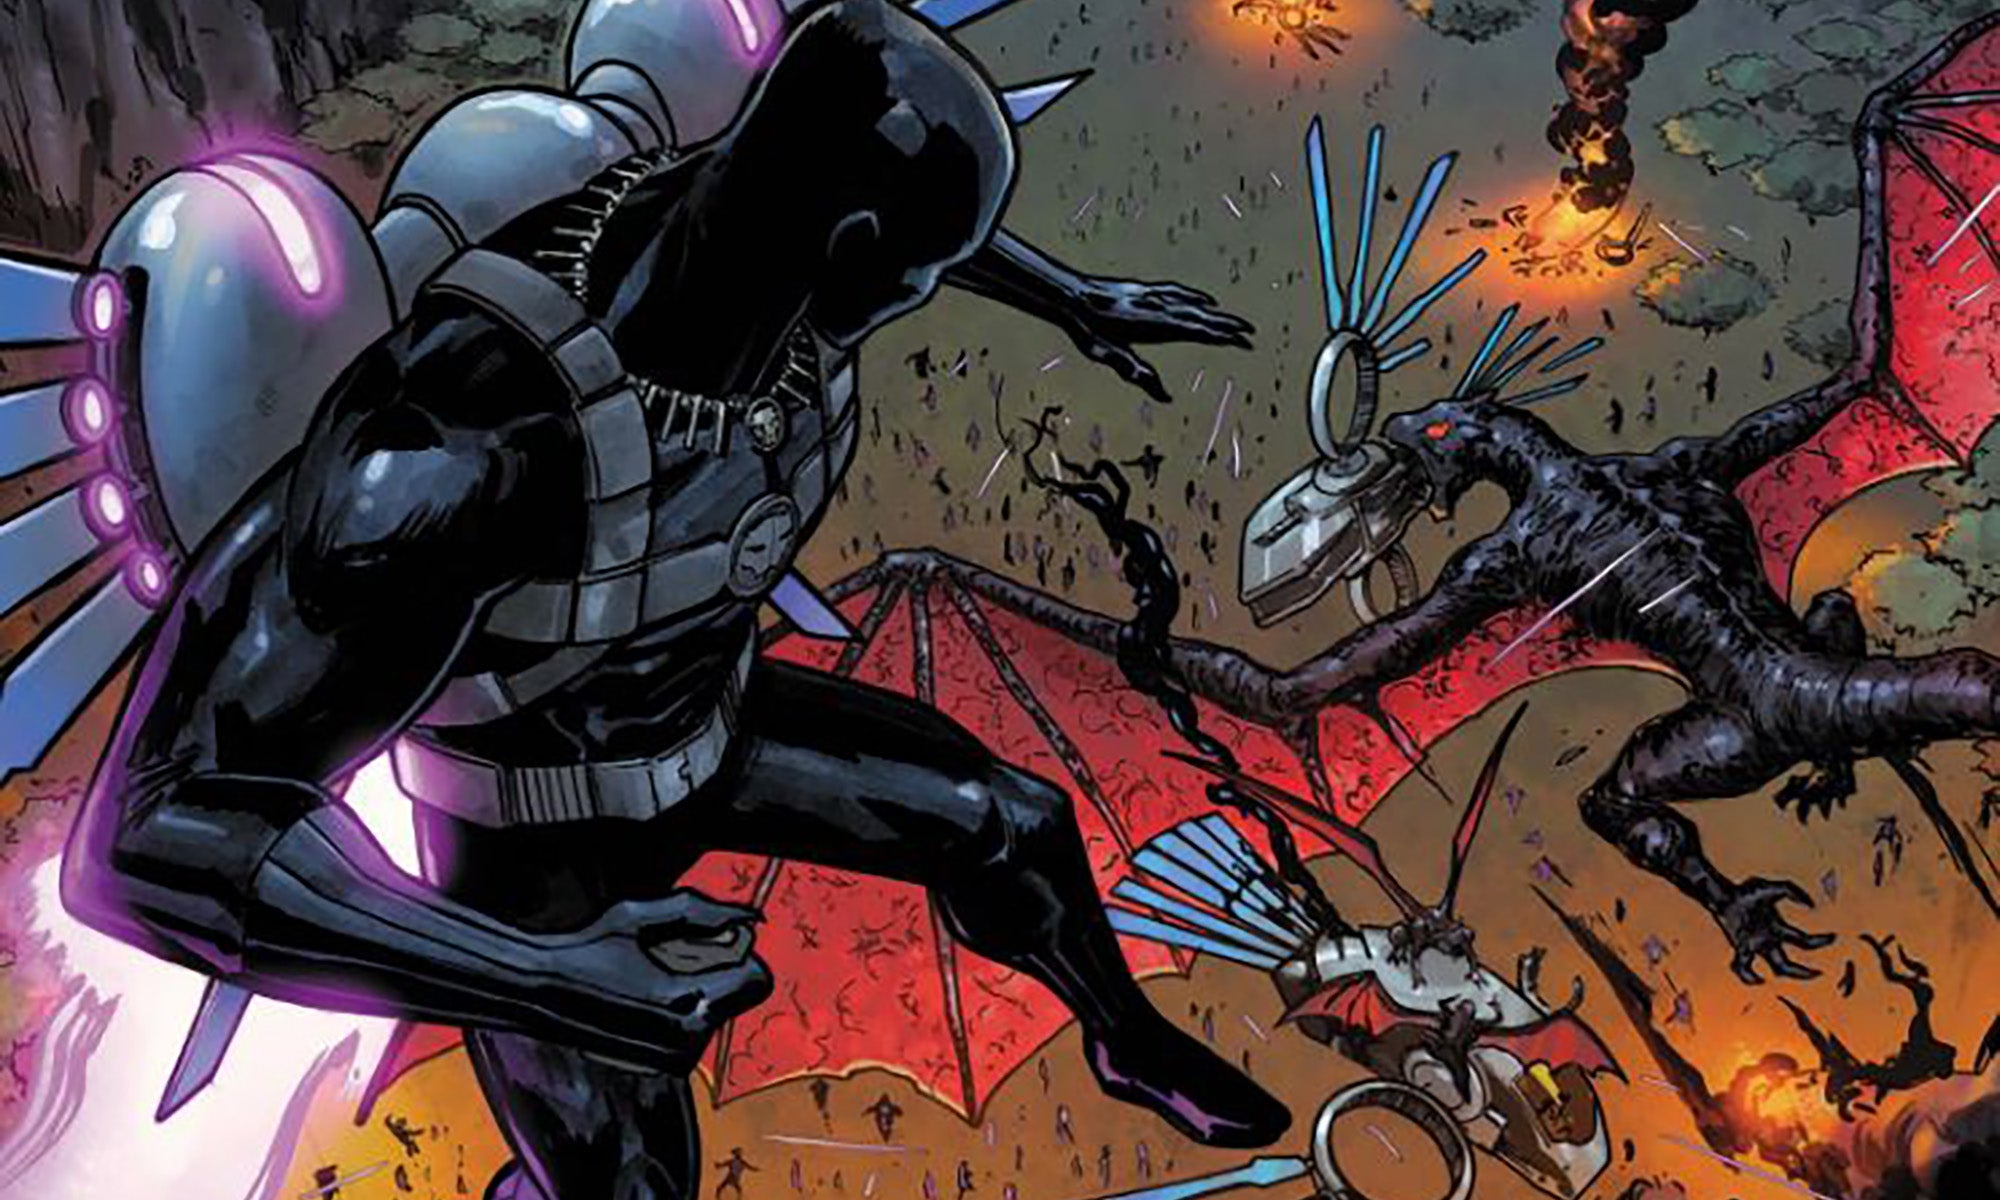 T'Challa descends onto a battlefield as a Symbiote Dragon attacks one of Wakanda's fighter planes.